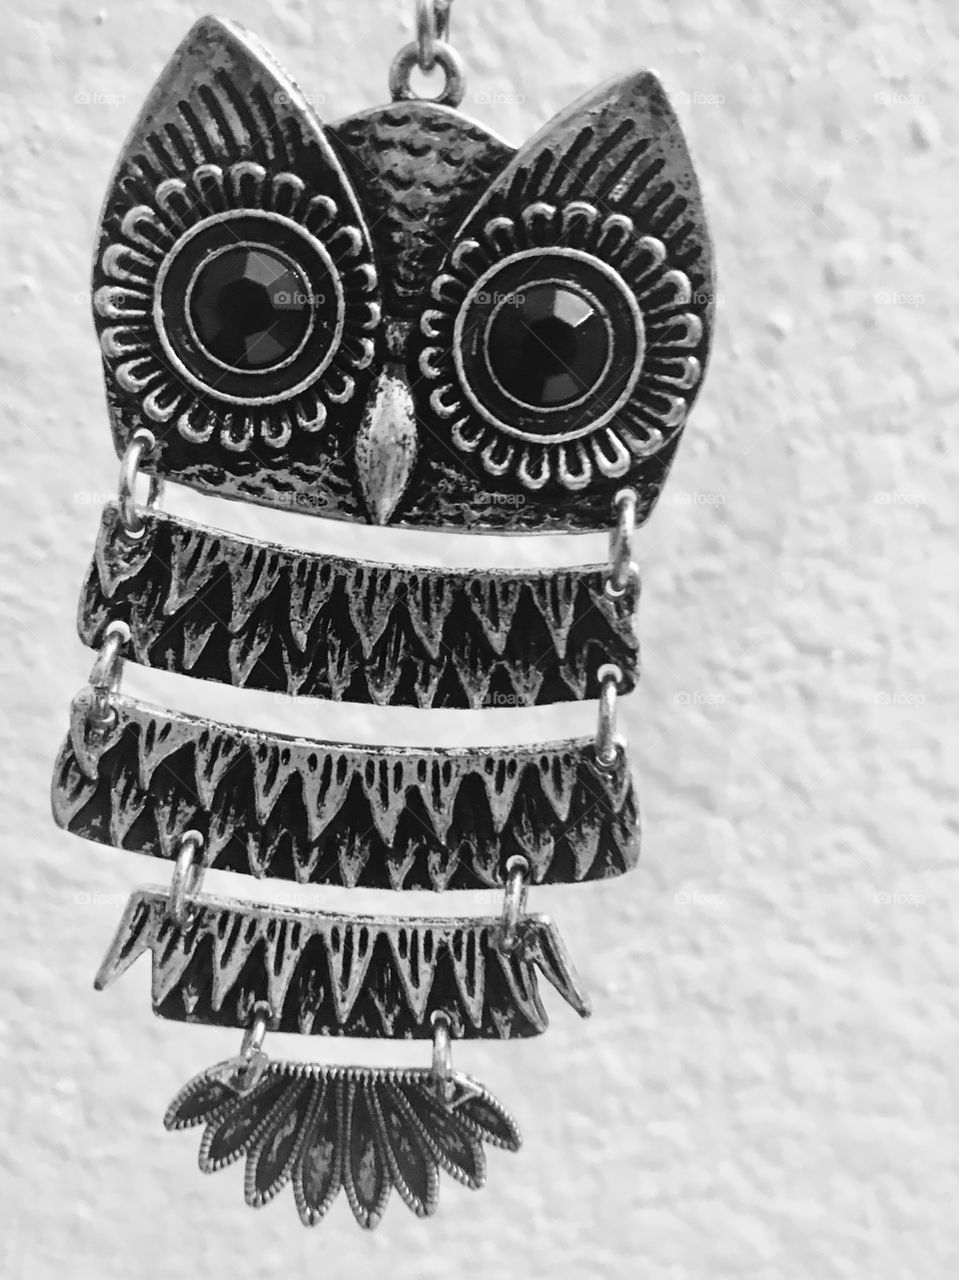 An owl necklace piece.